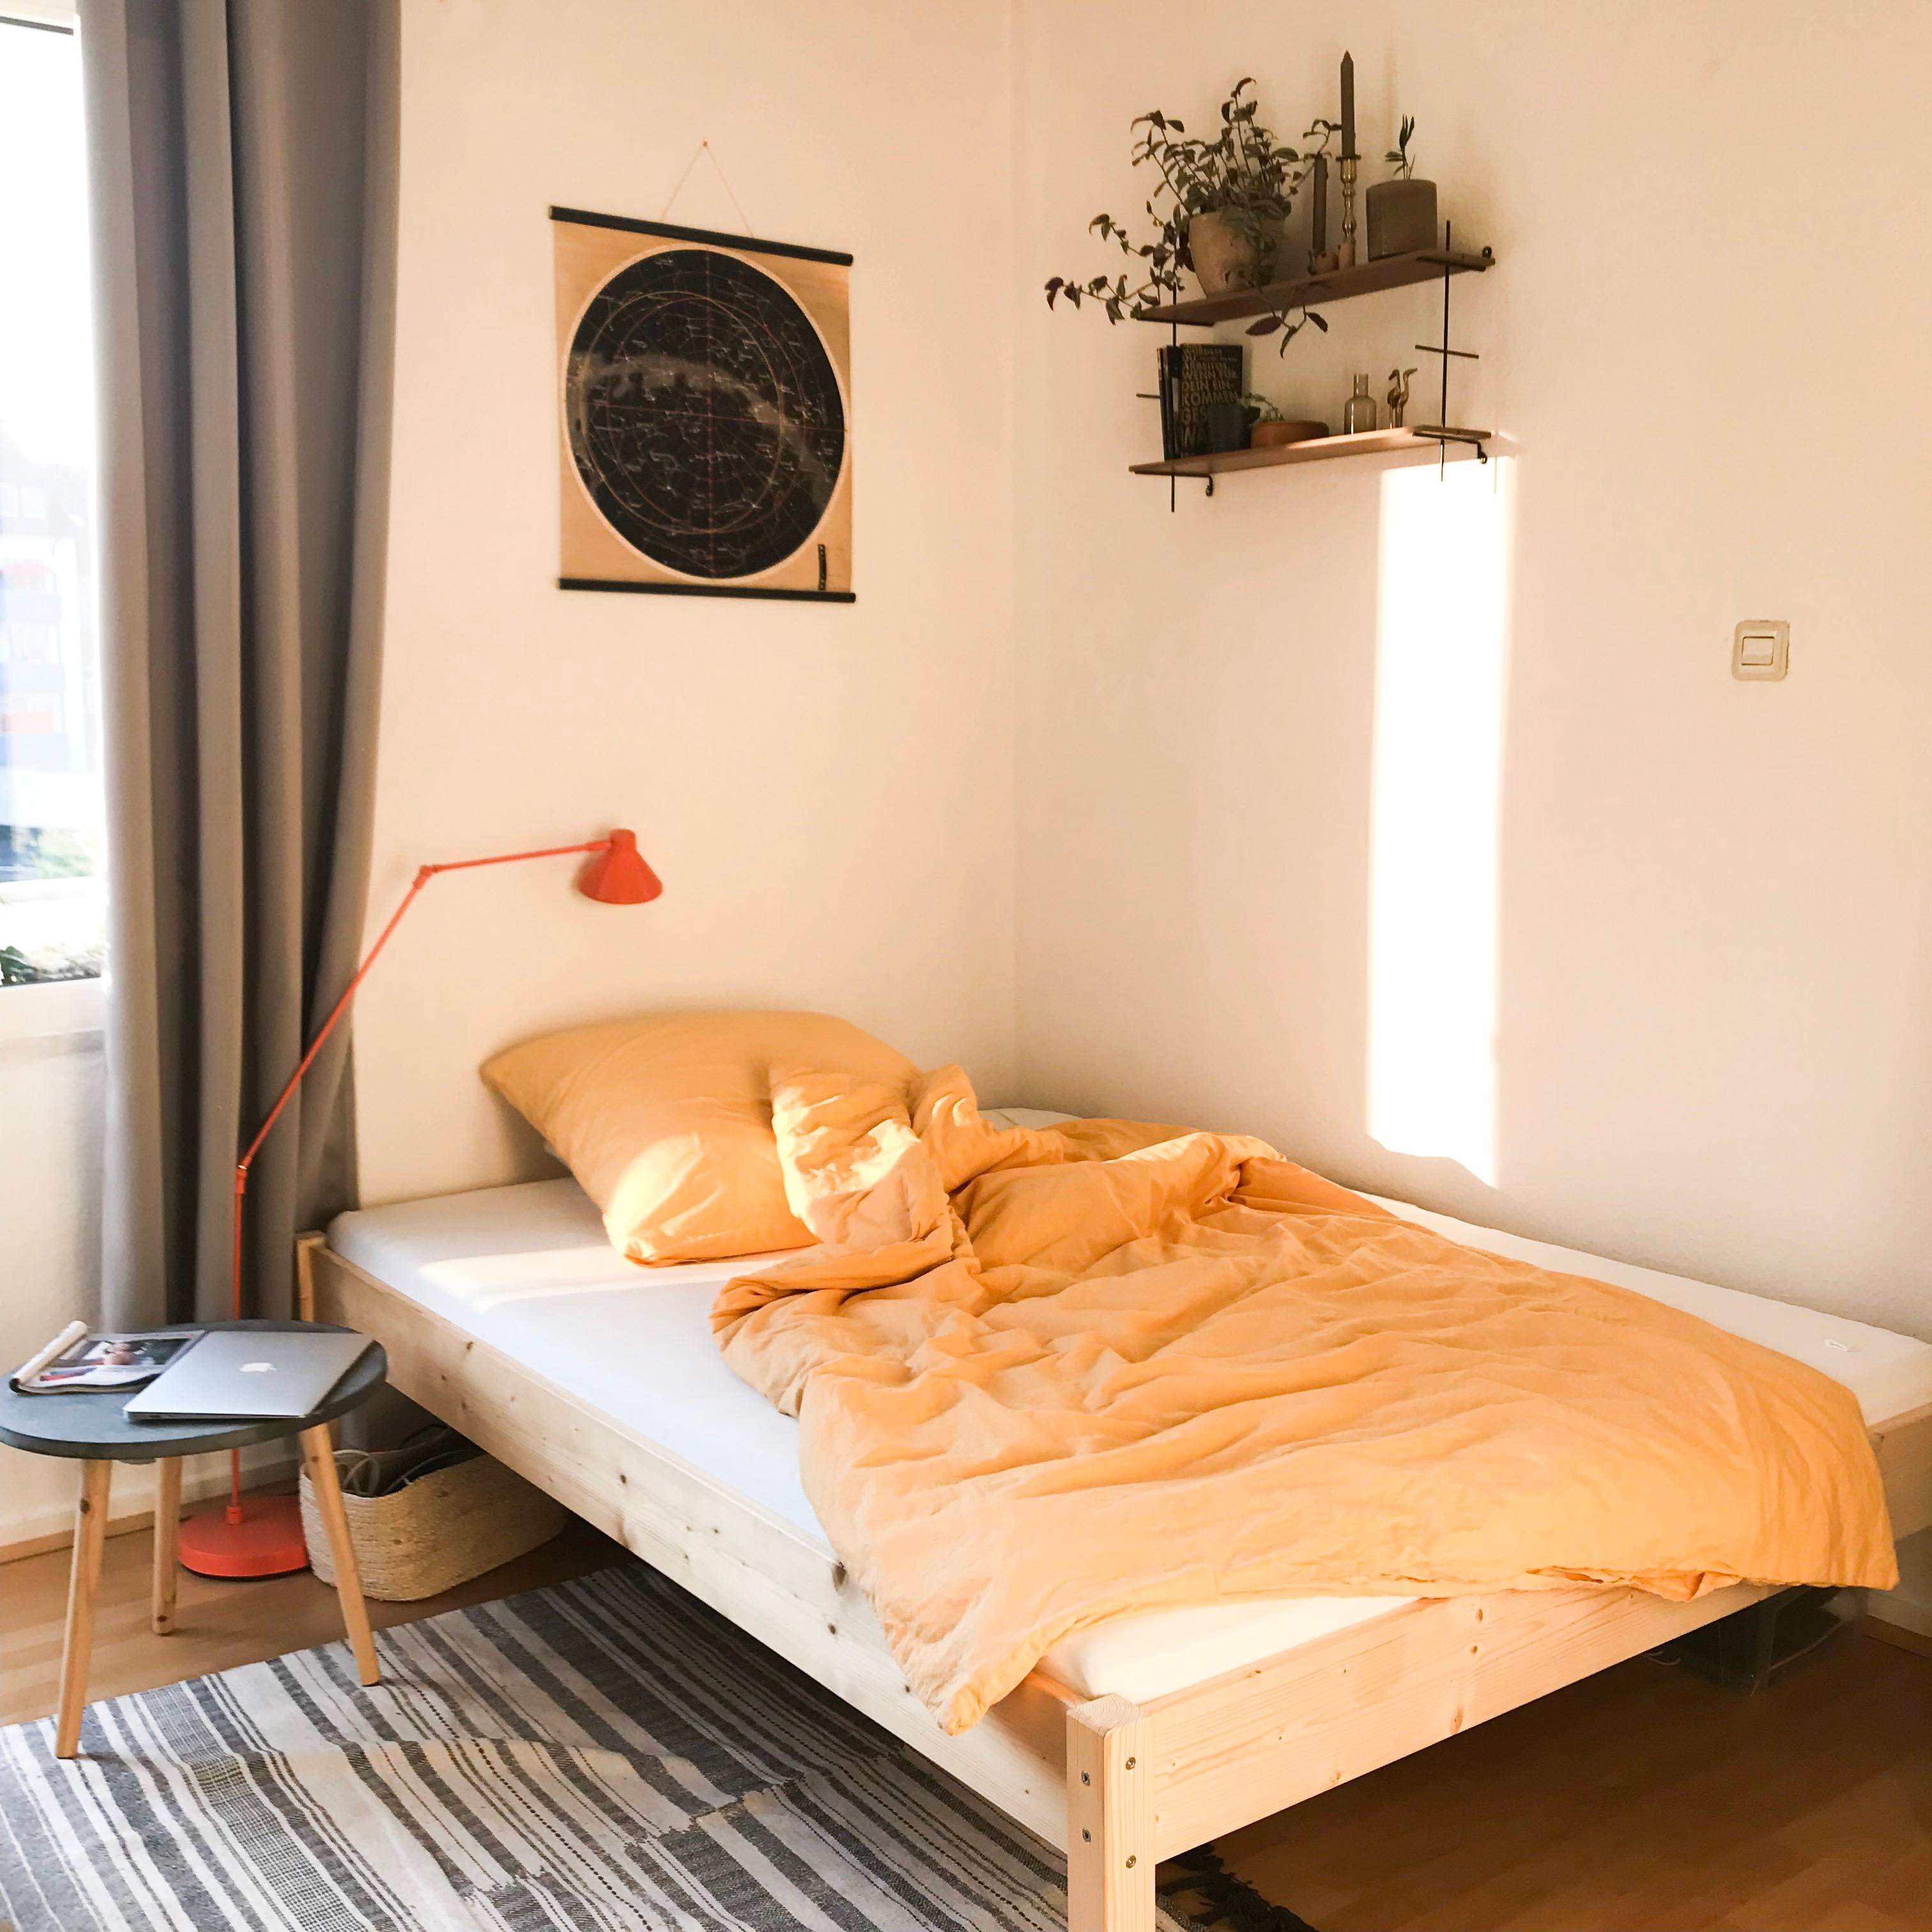 #bedroom #schlafenszeit #sunnydays #mornings 